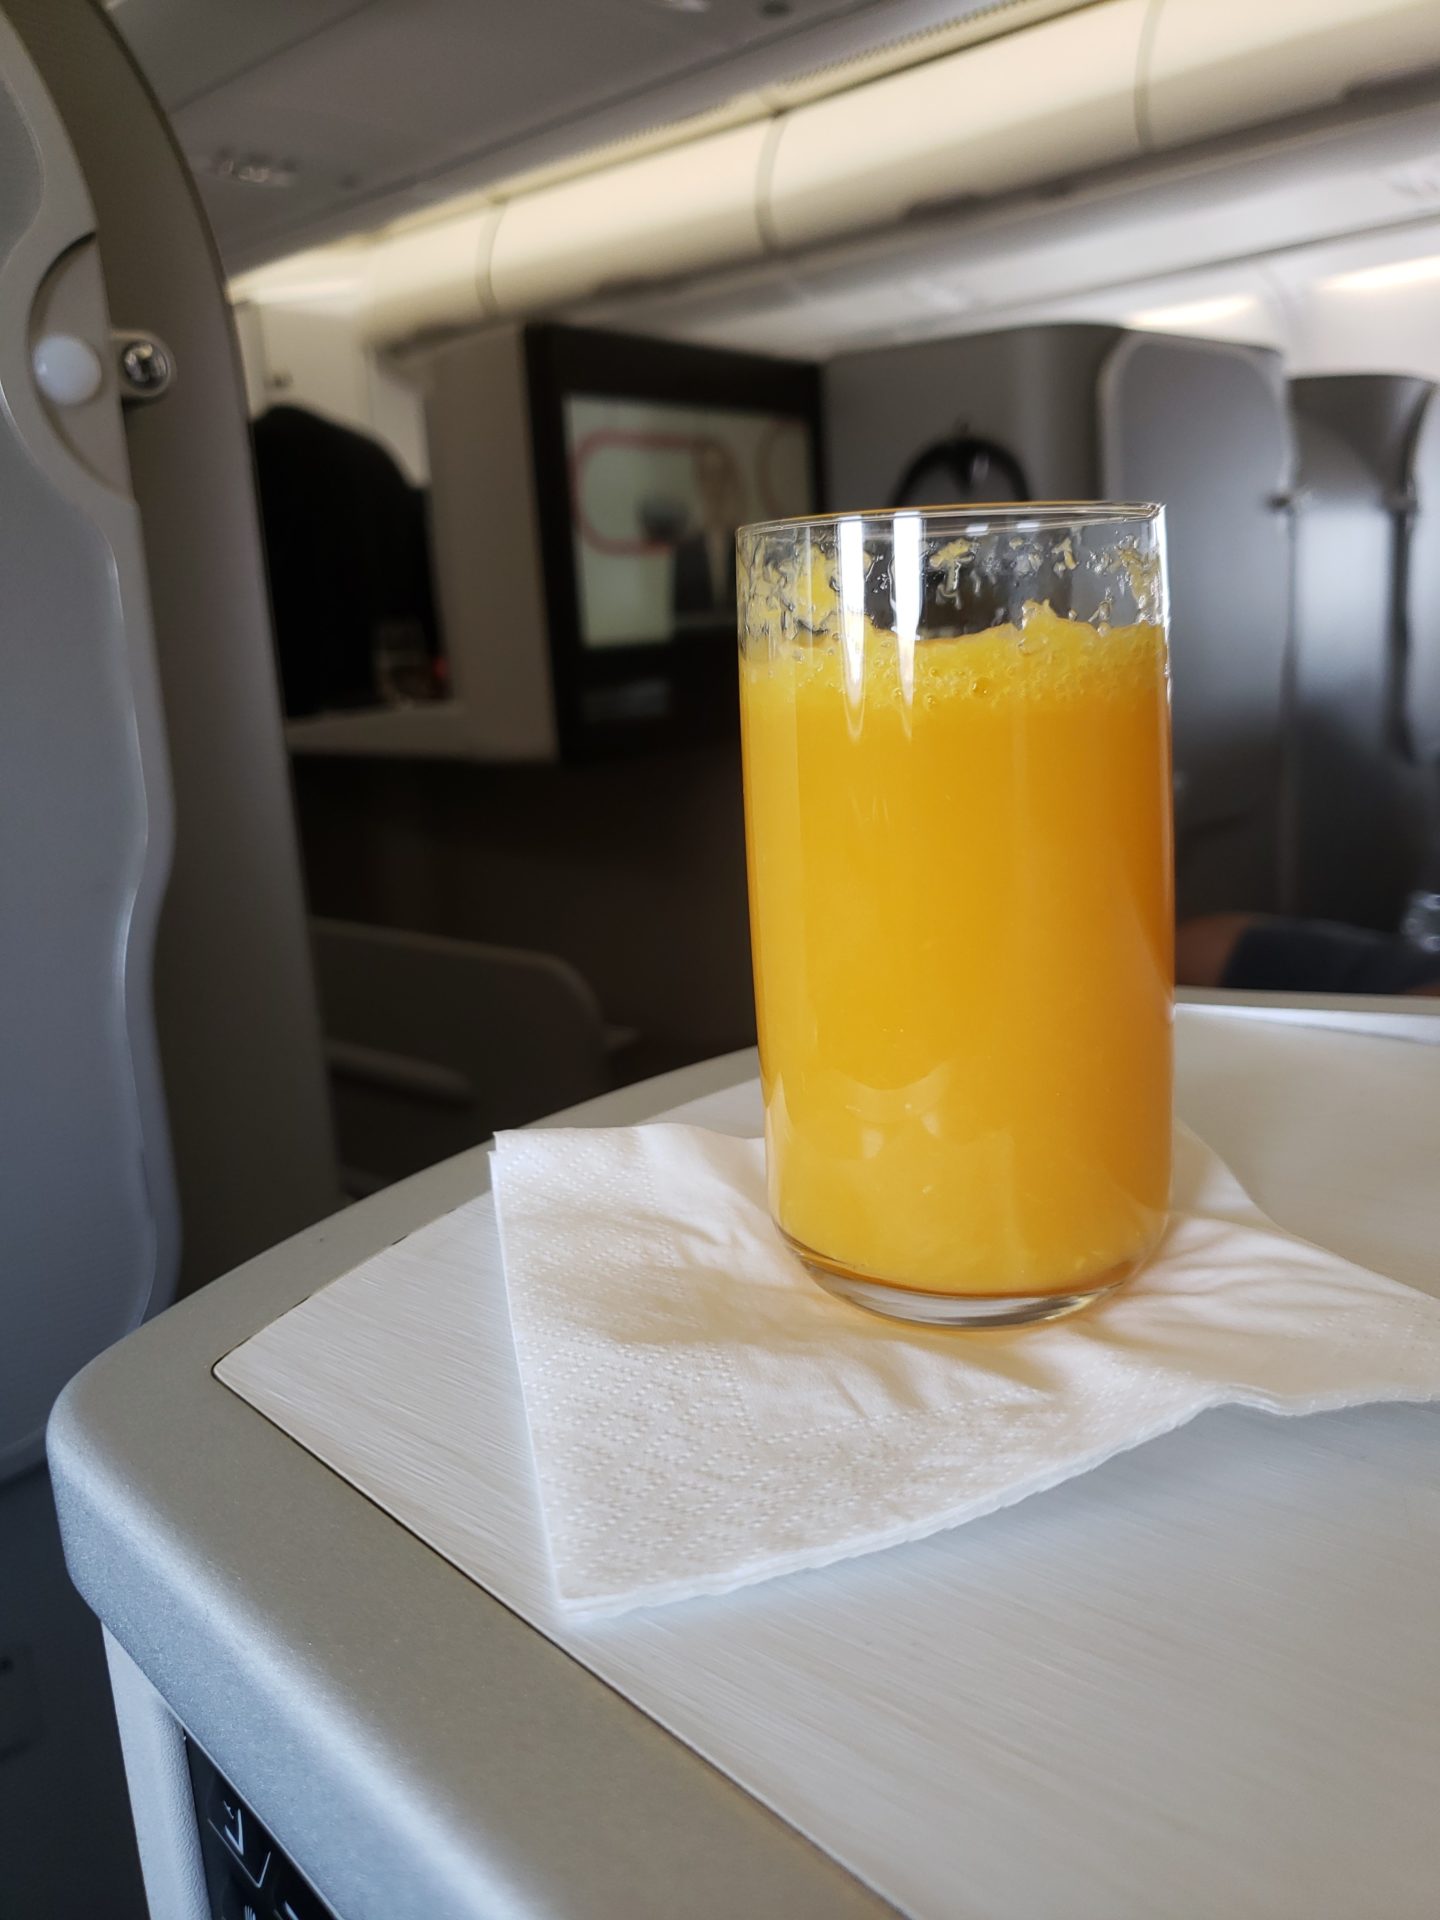 a glass of orange juice on a napkin on a table